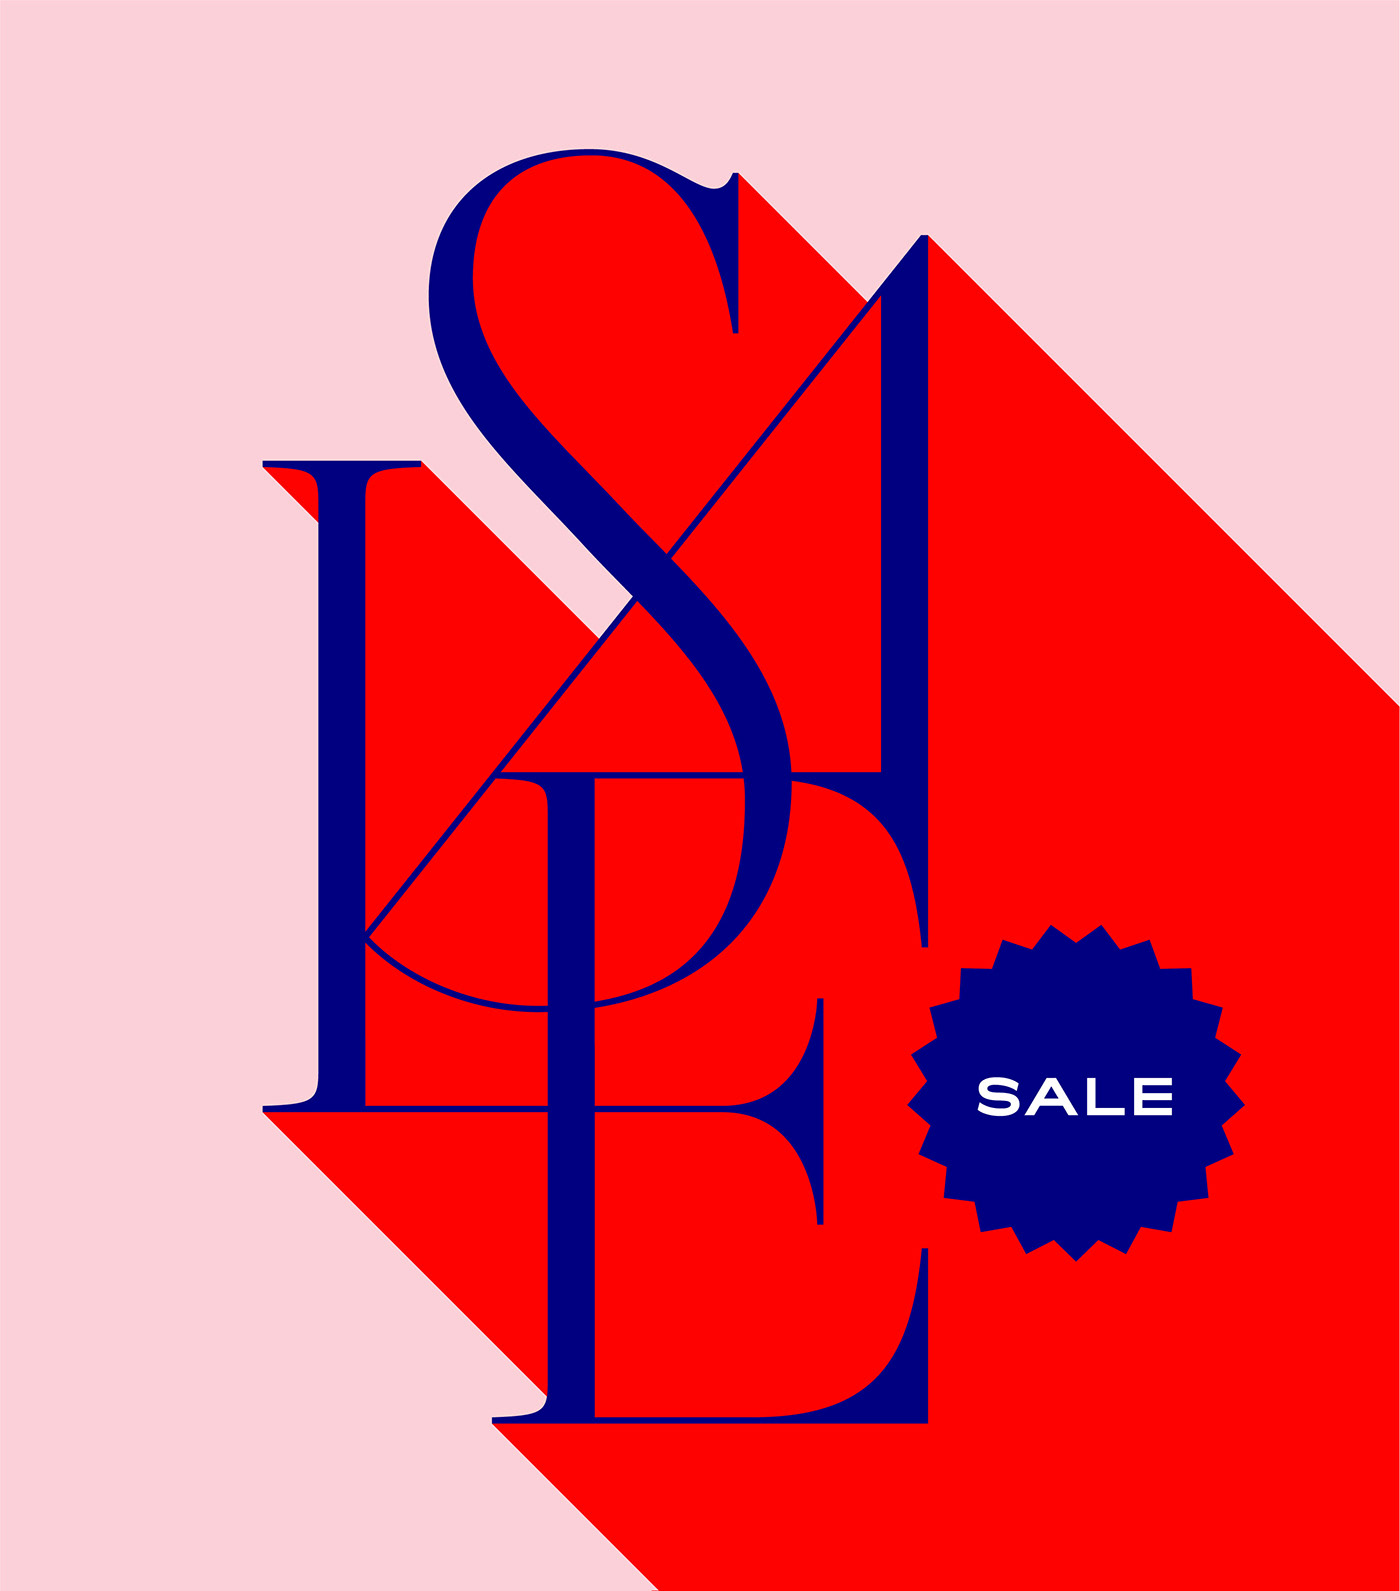 "SALE" typography art by kissmiklos .